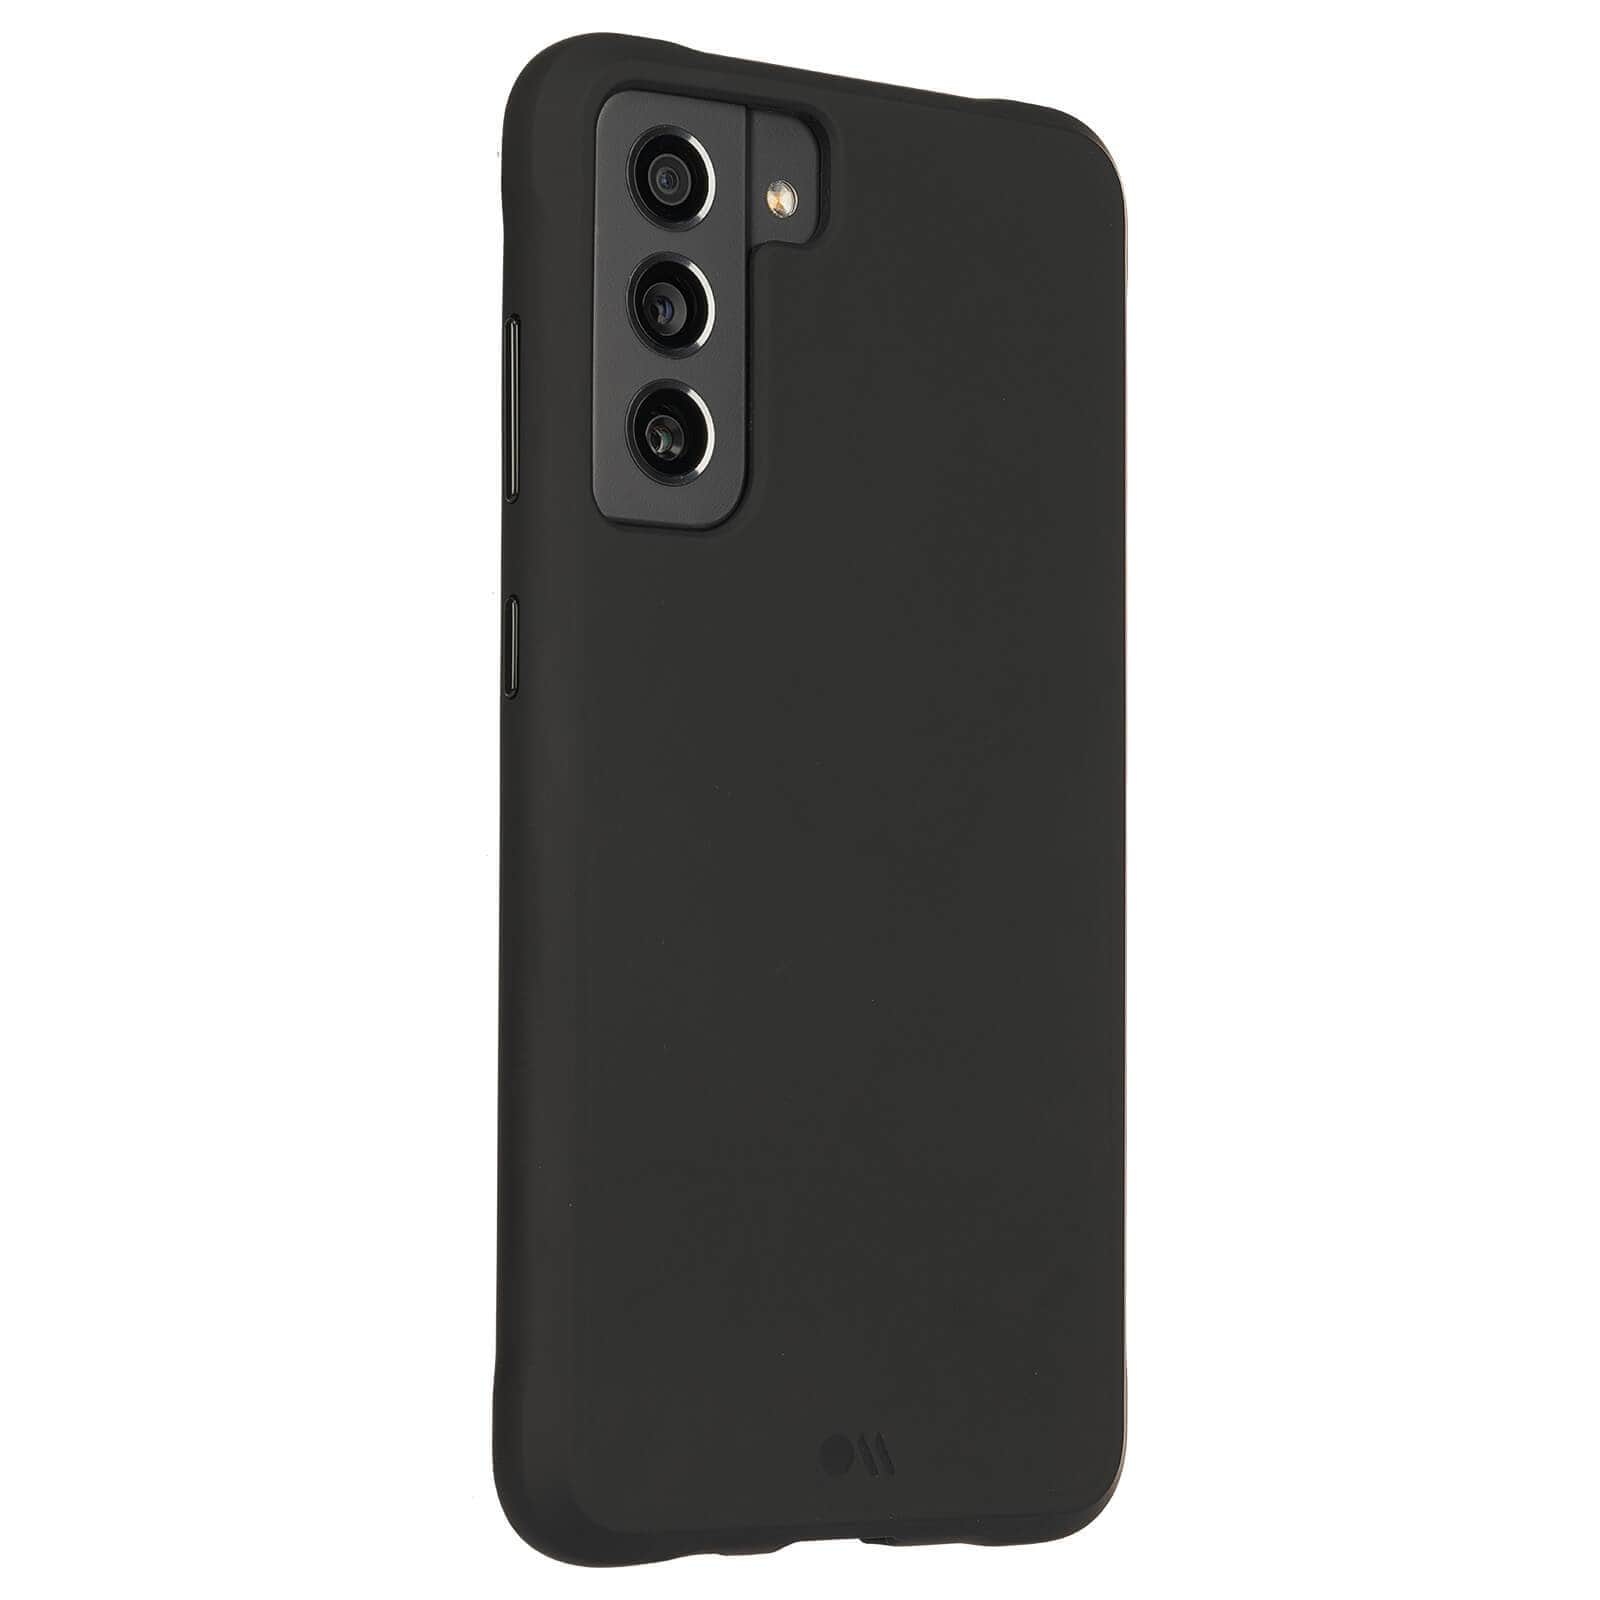 Tough black protective case for Samsung Galaxy S21 FE 5G color::Black